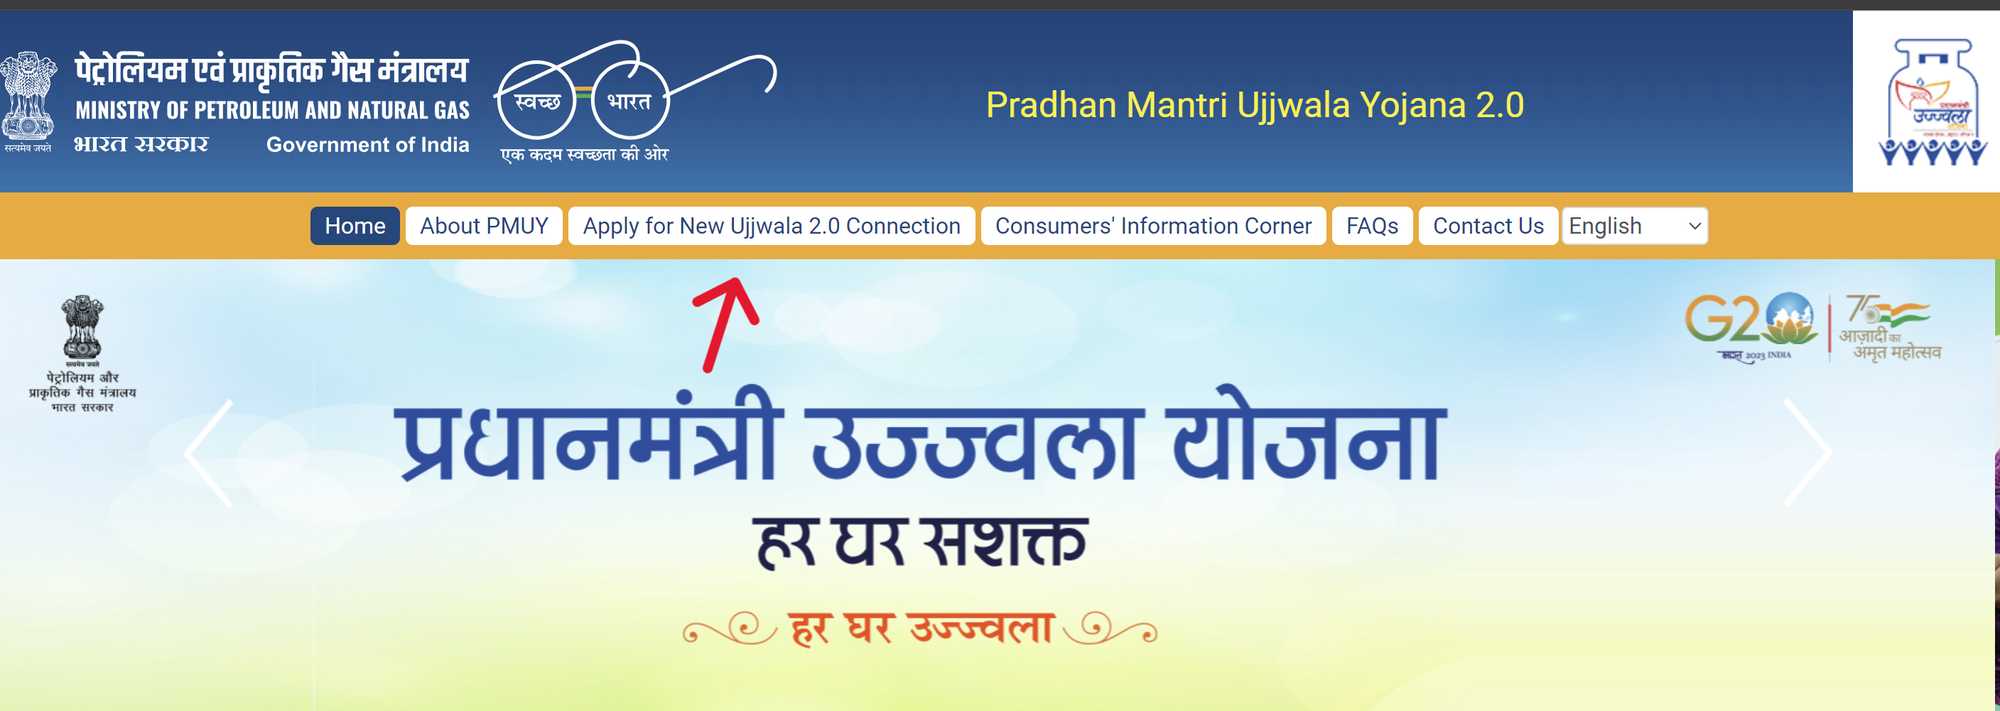 PM Ujjwala Official Portal